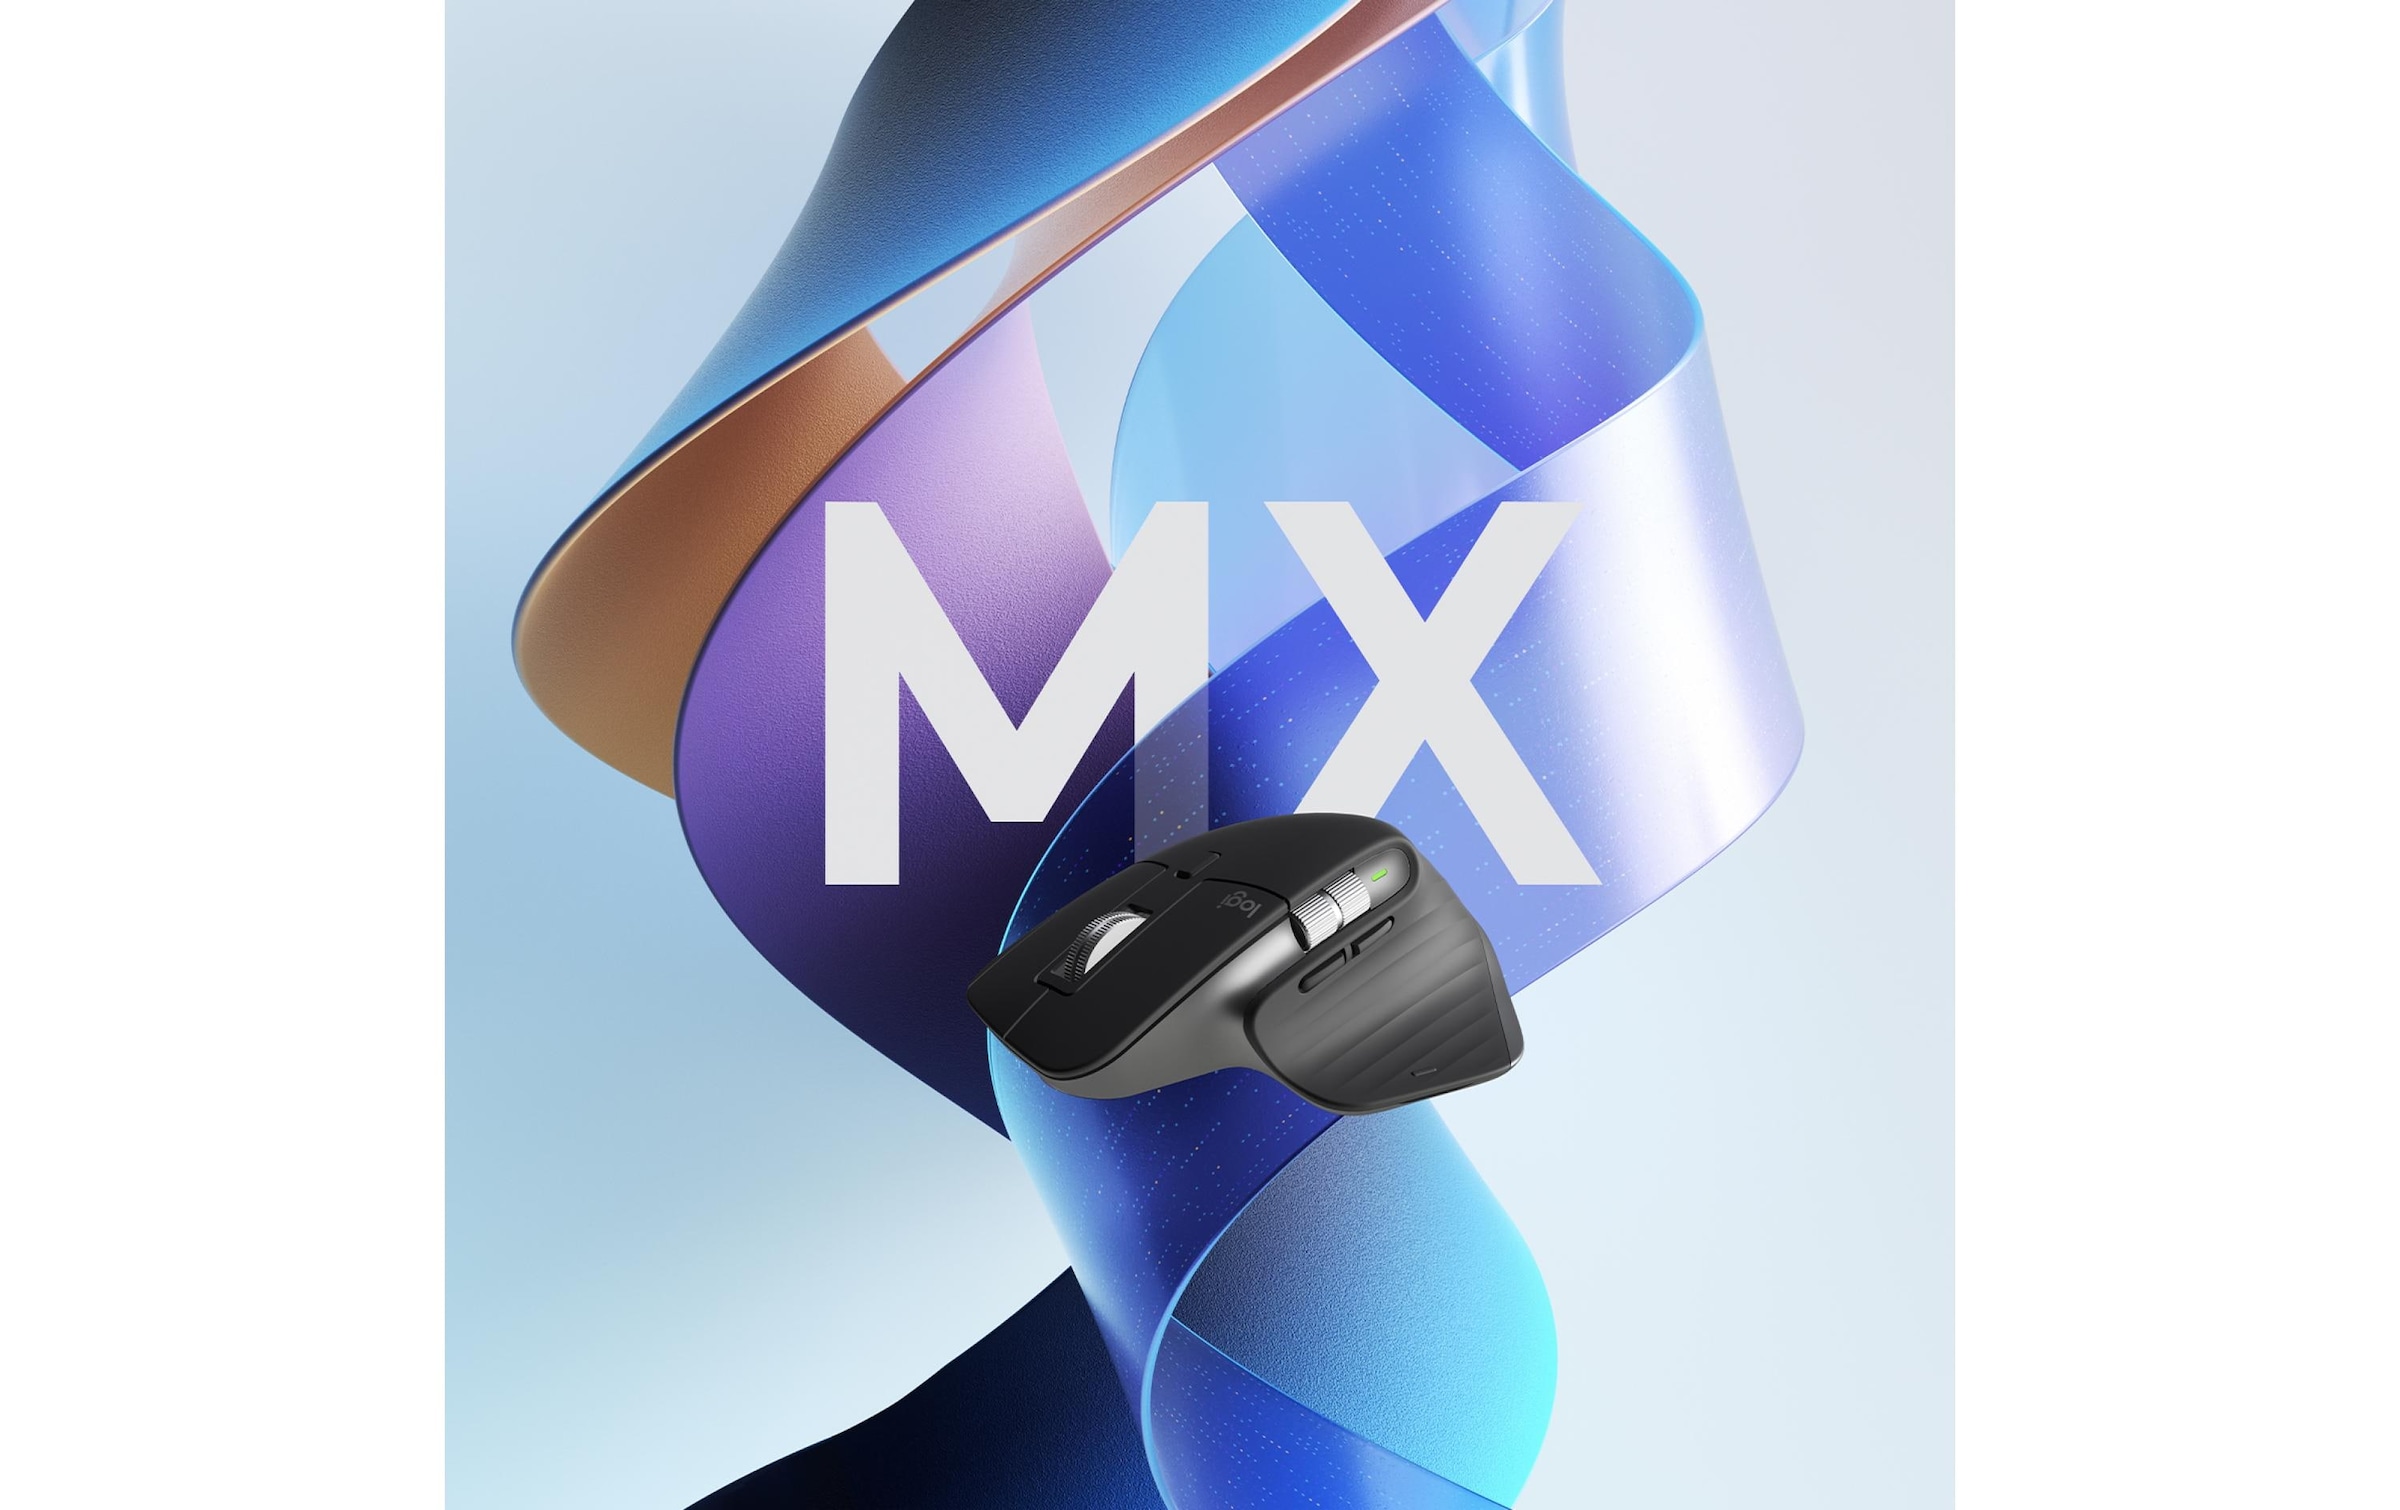 Logitech Maus »MX Master 3S Graphite for Business«, kabellos